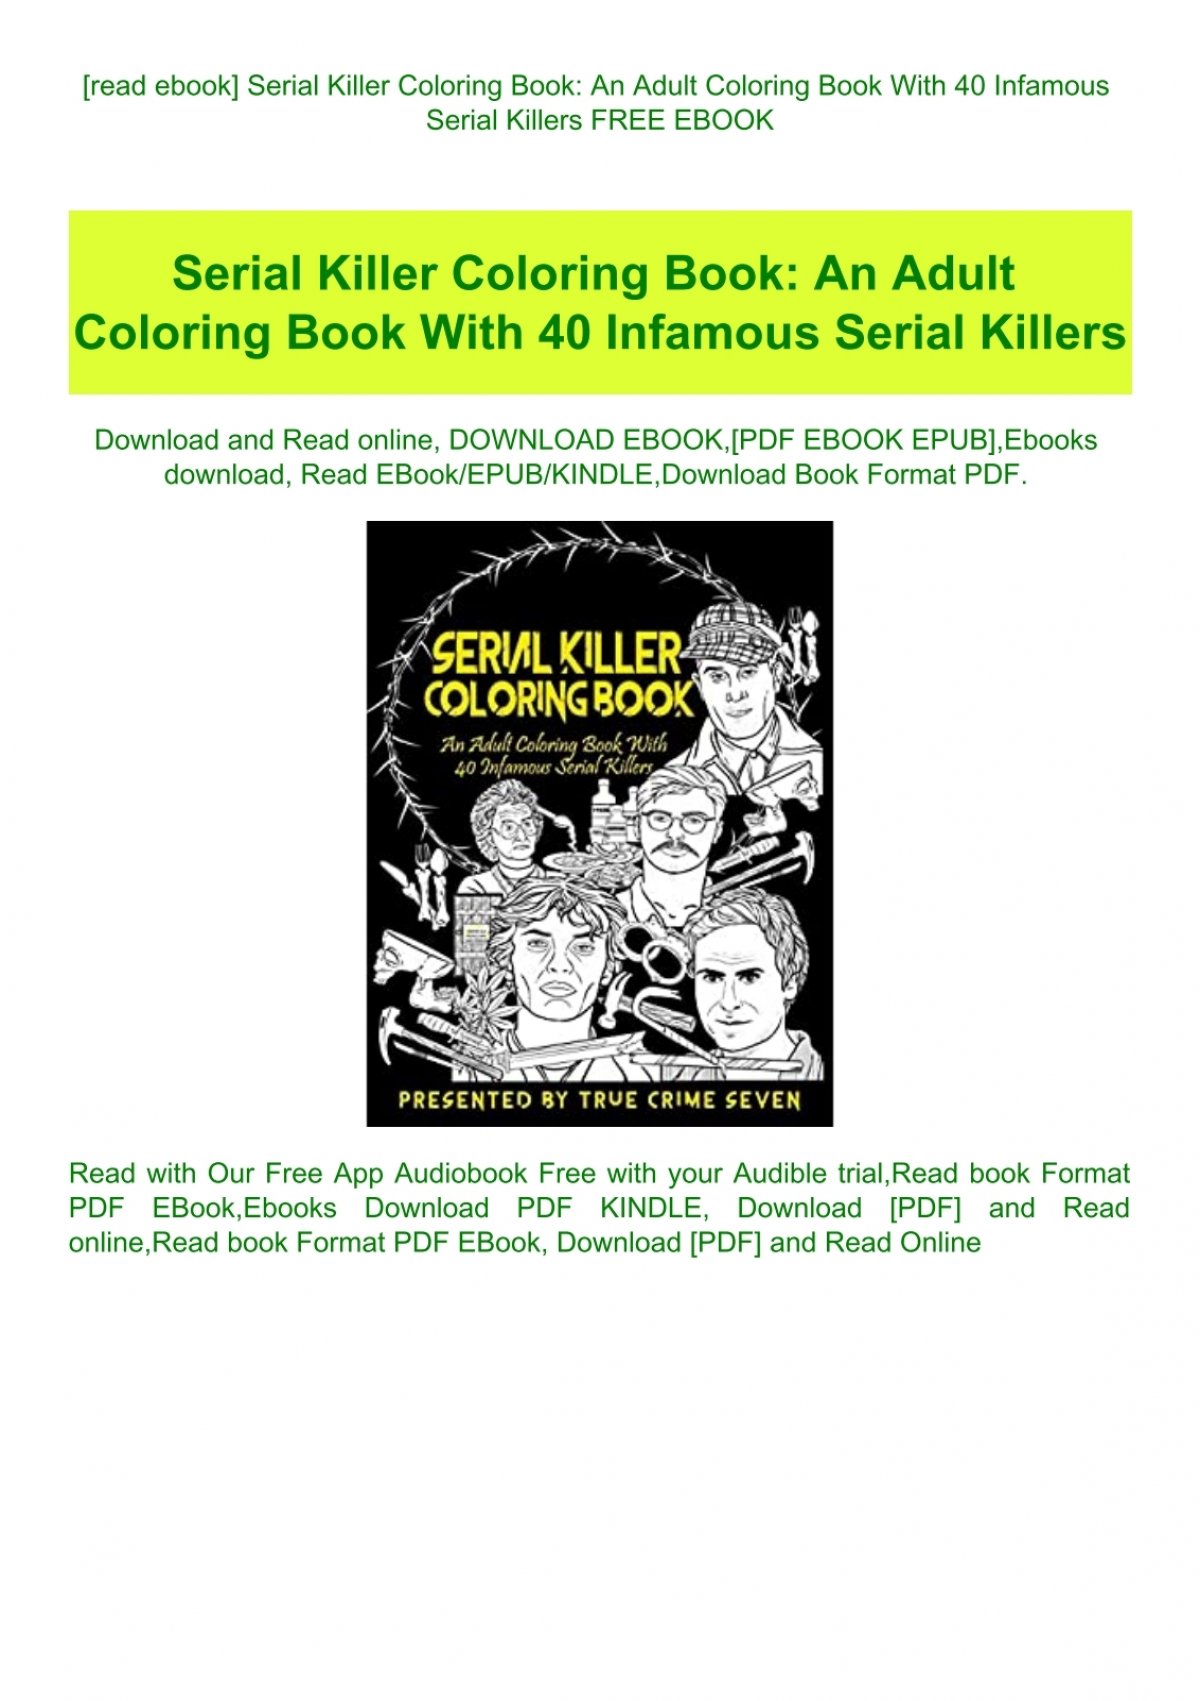 Download Read Ebook Serial Killer Coloring Book An Adult Coloring Book With 40 Infamous Serial Killers Free Ebook